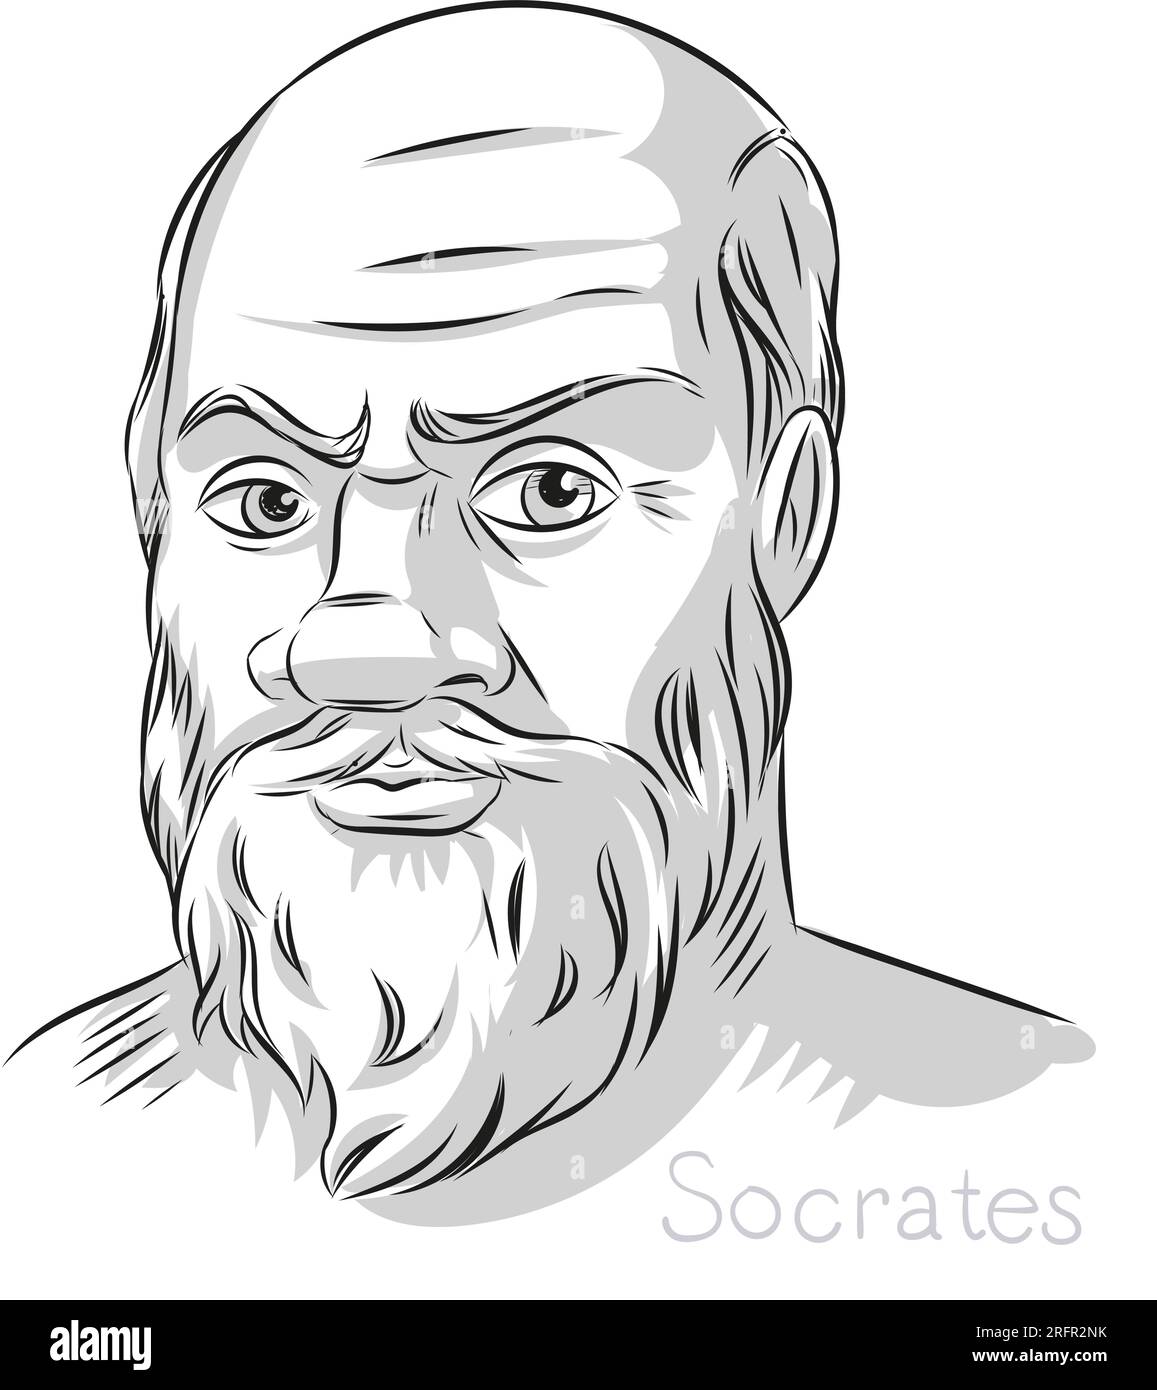 Socrates Greek Philosopher Stock Vector Images Alamy 3930